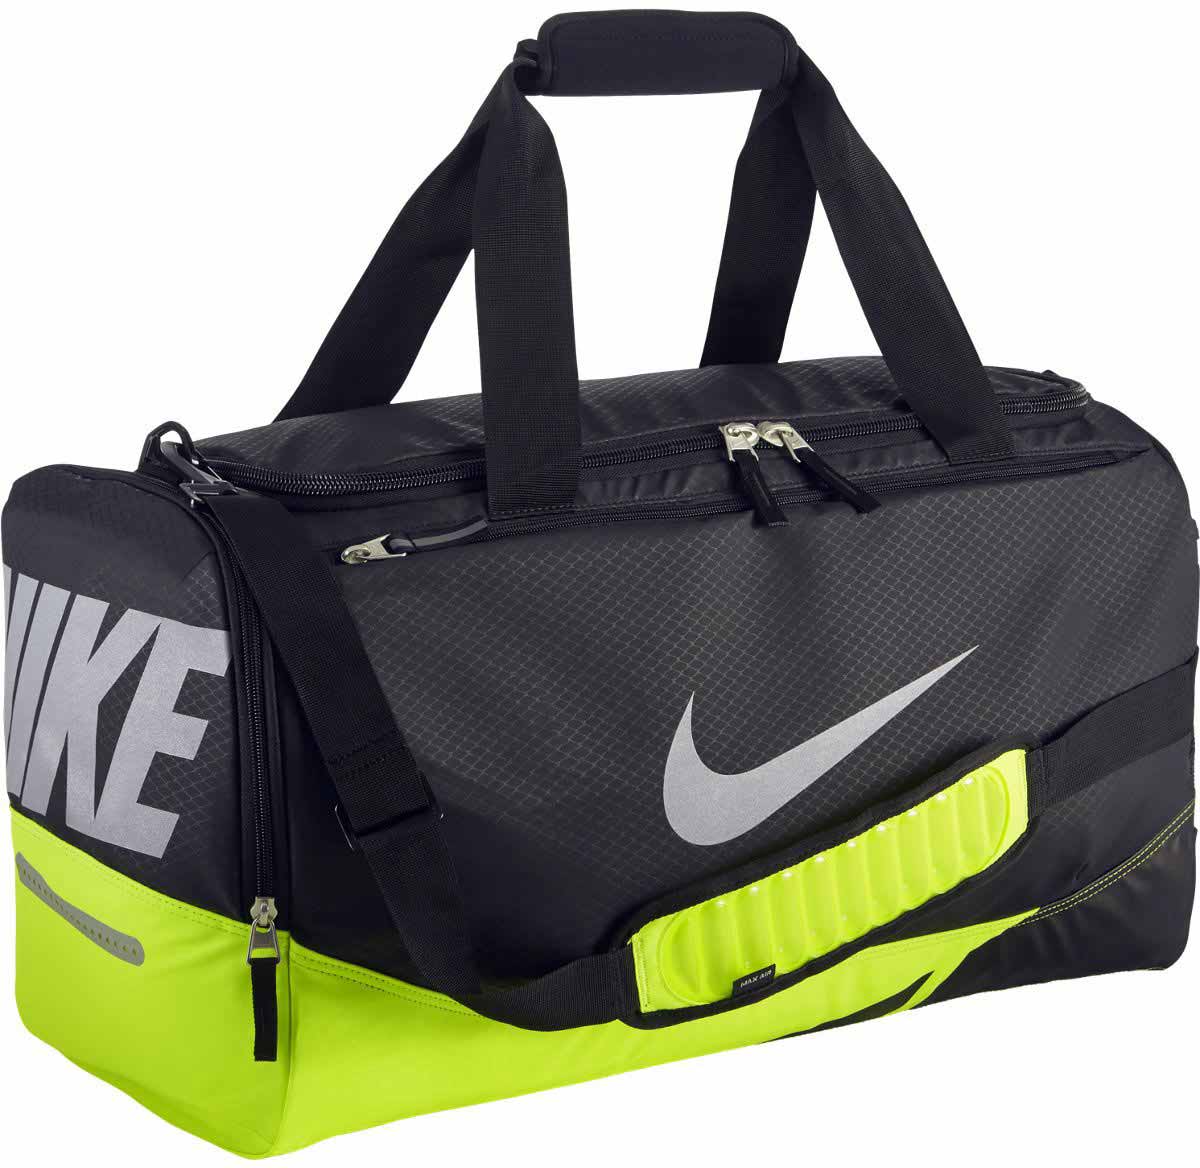 Nike Air Max Vapor Gym Bag